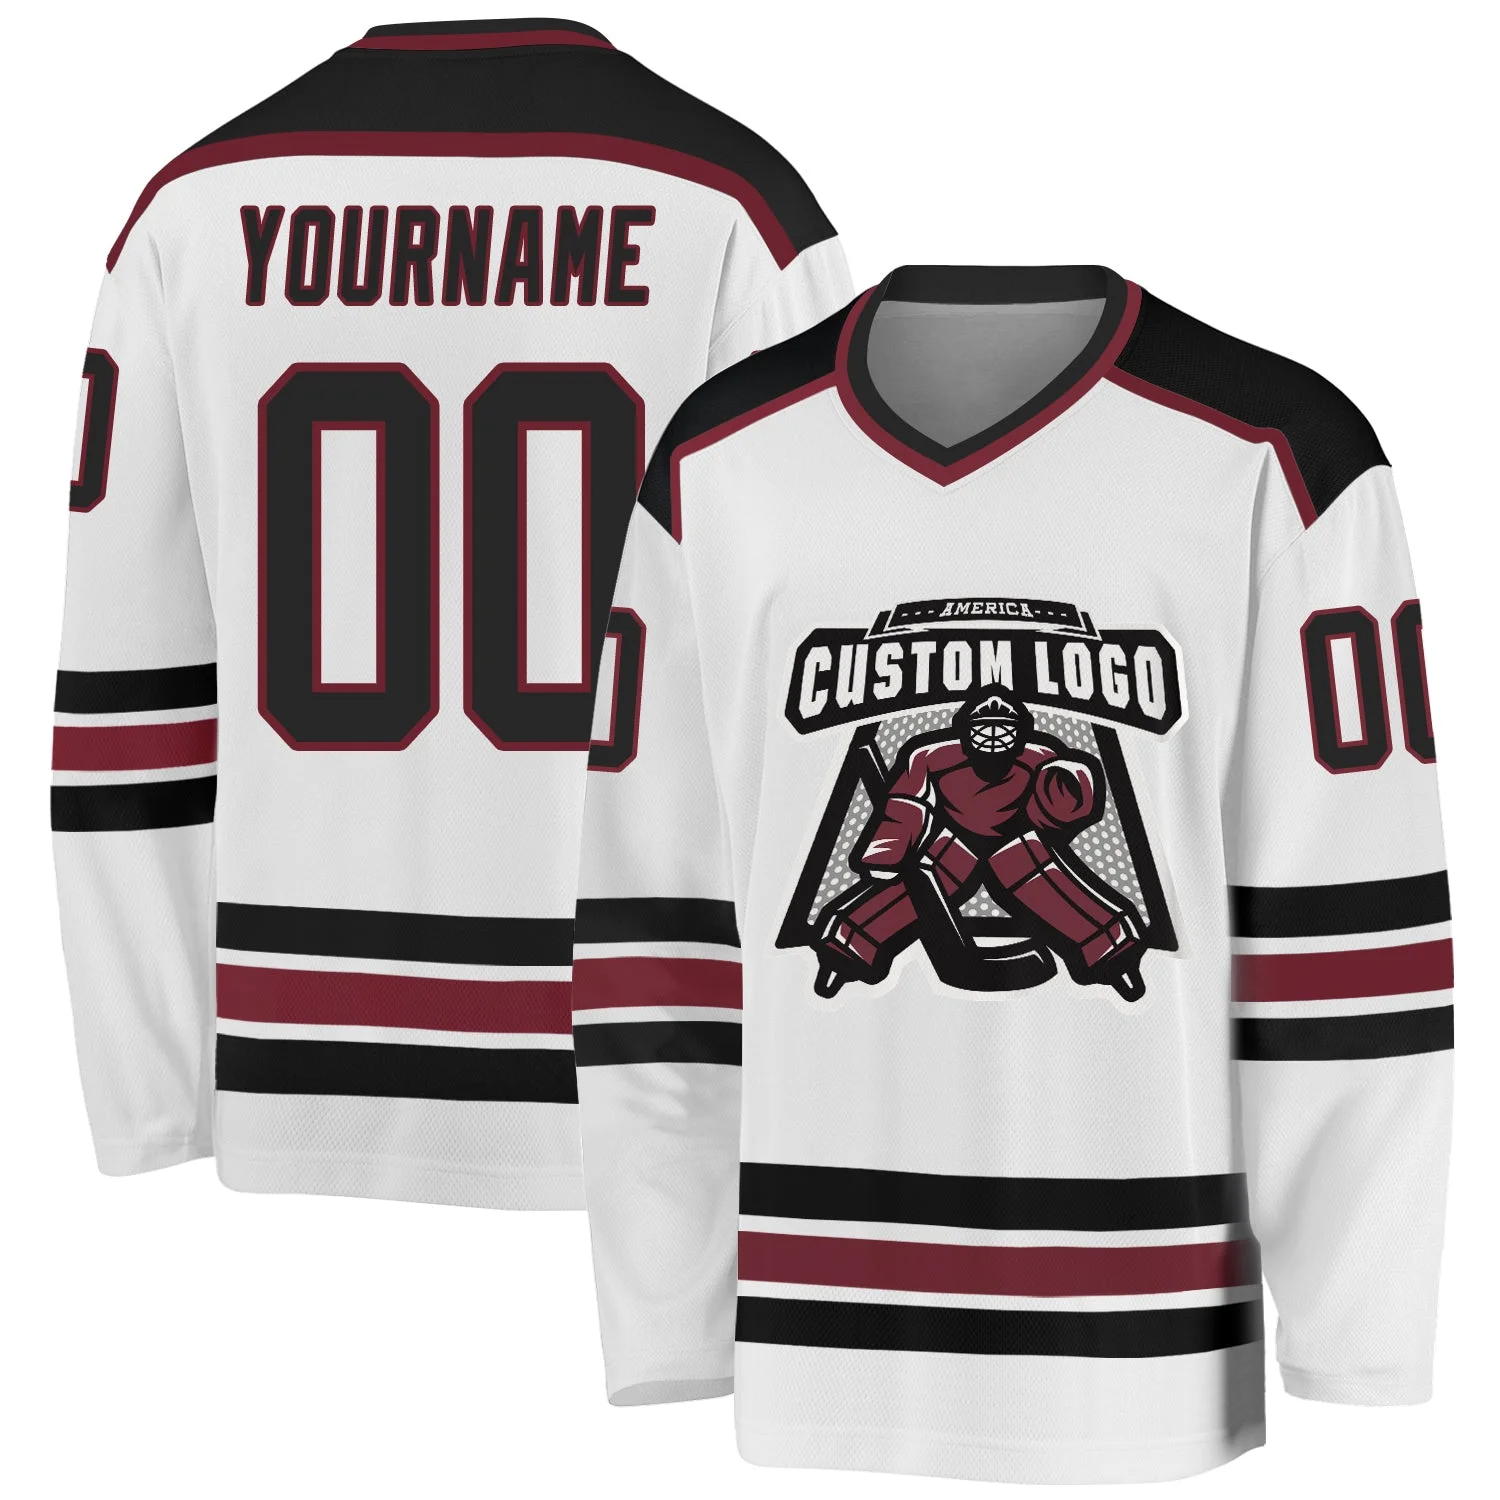 Stitched And Print White Black-burgundy Hockey Jersey Custom